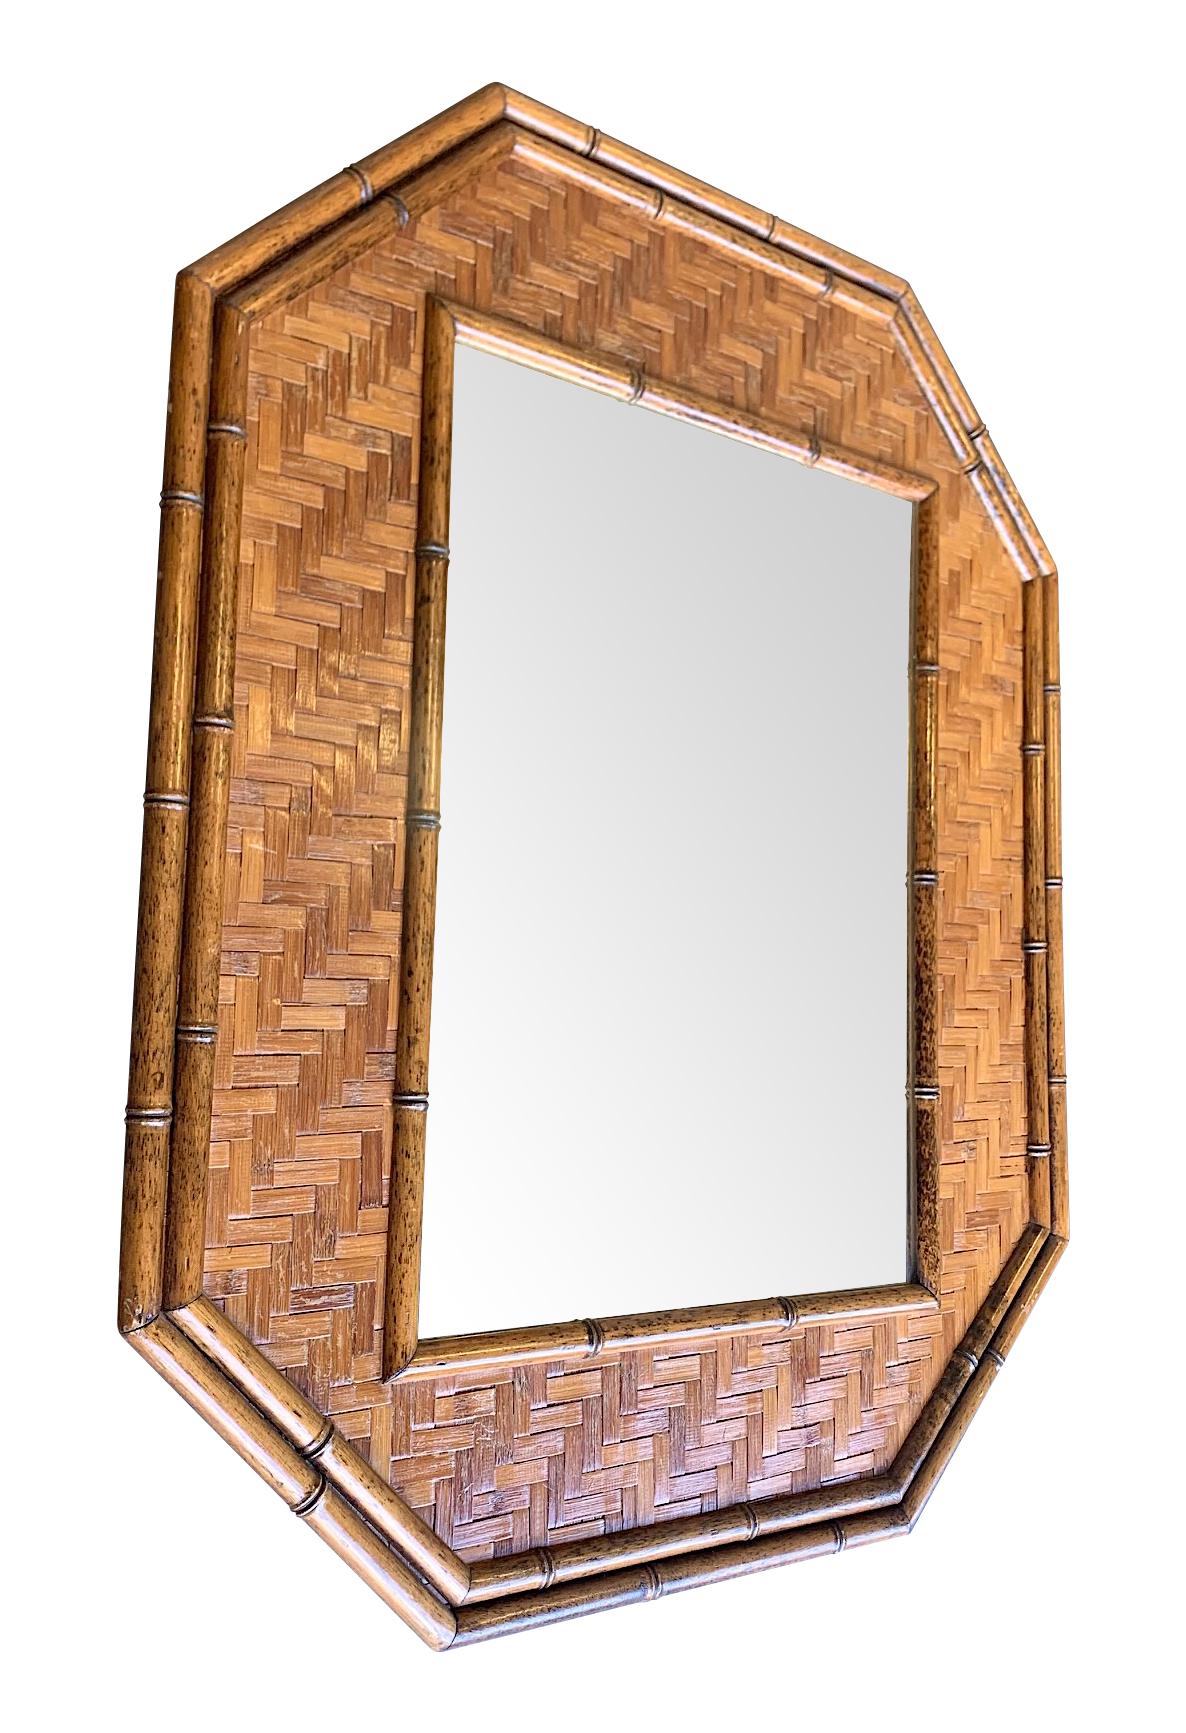 An Italian 1970s octagonal rattan and bamboo mirror